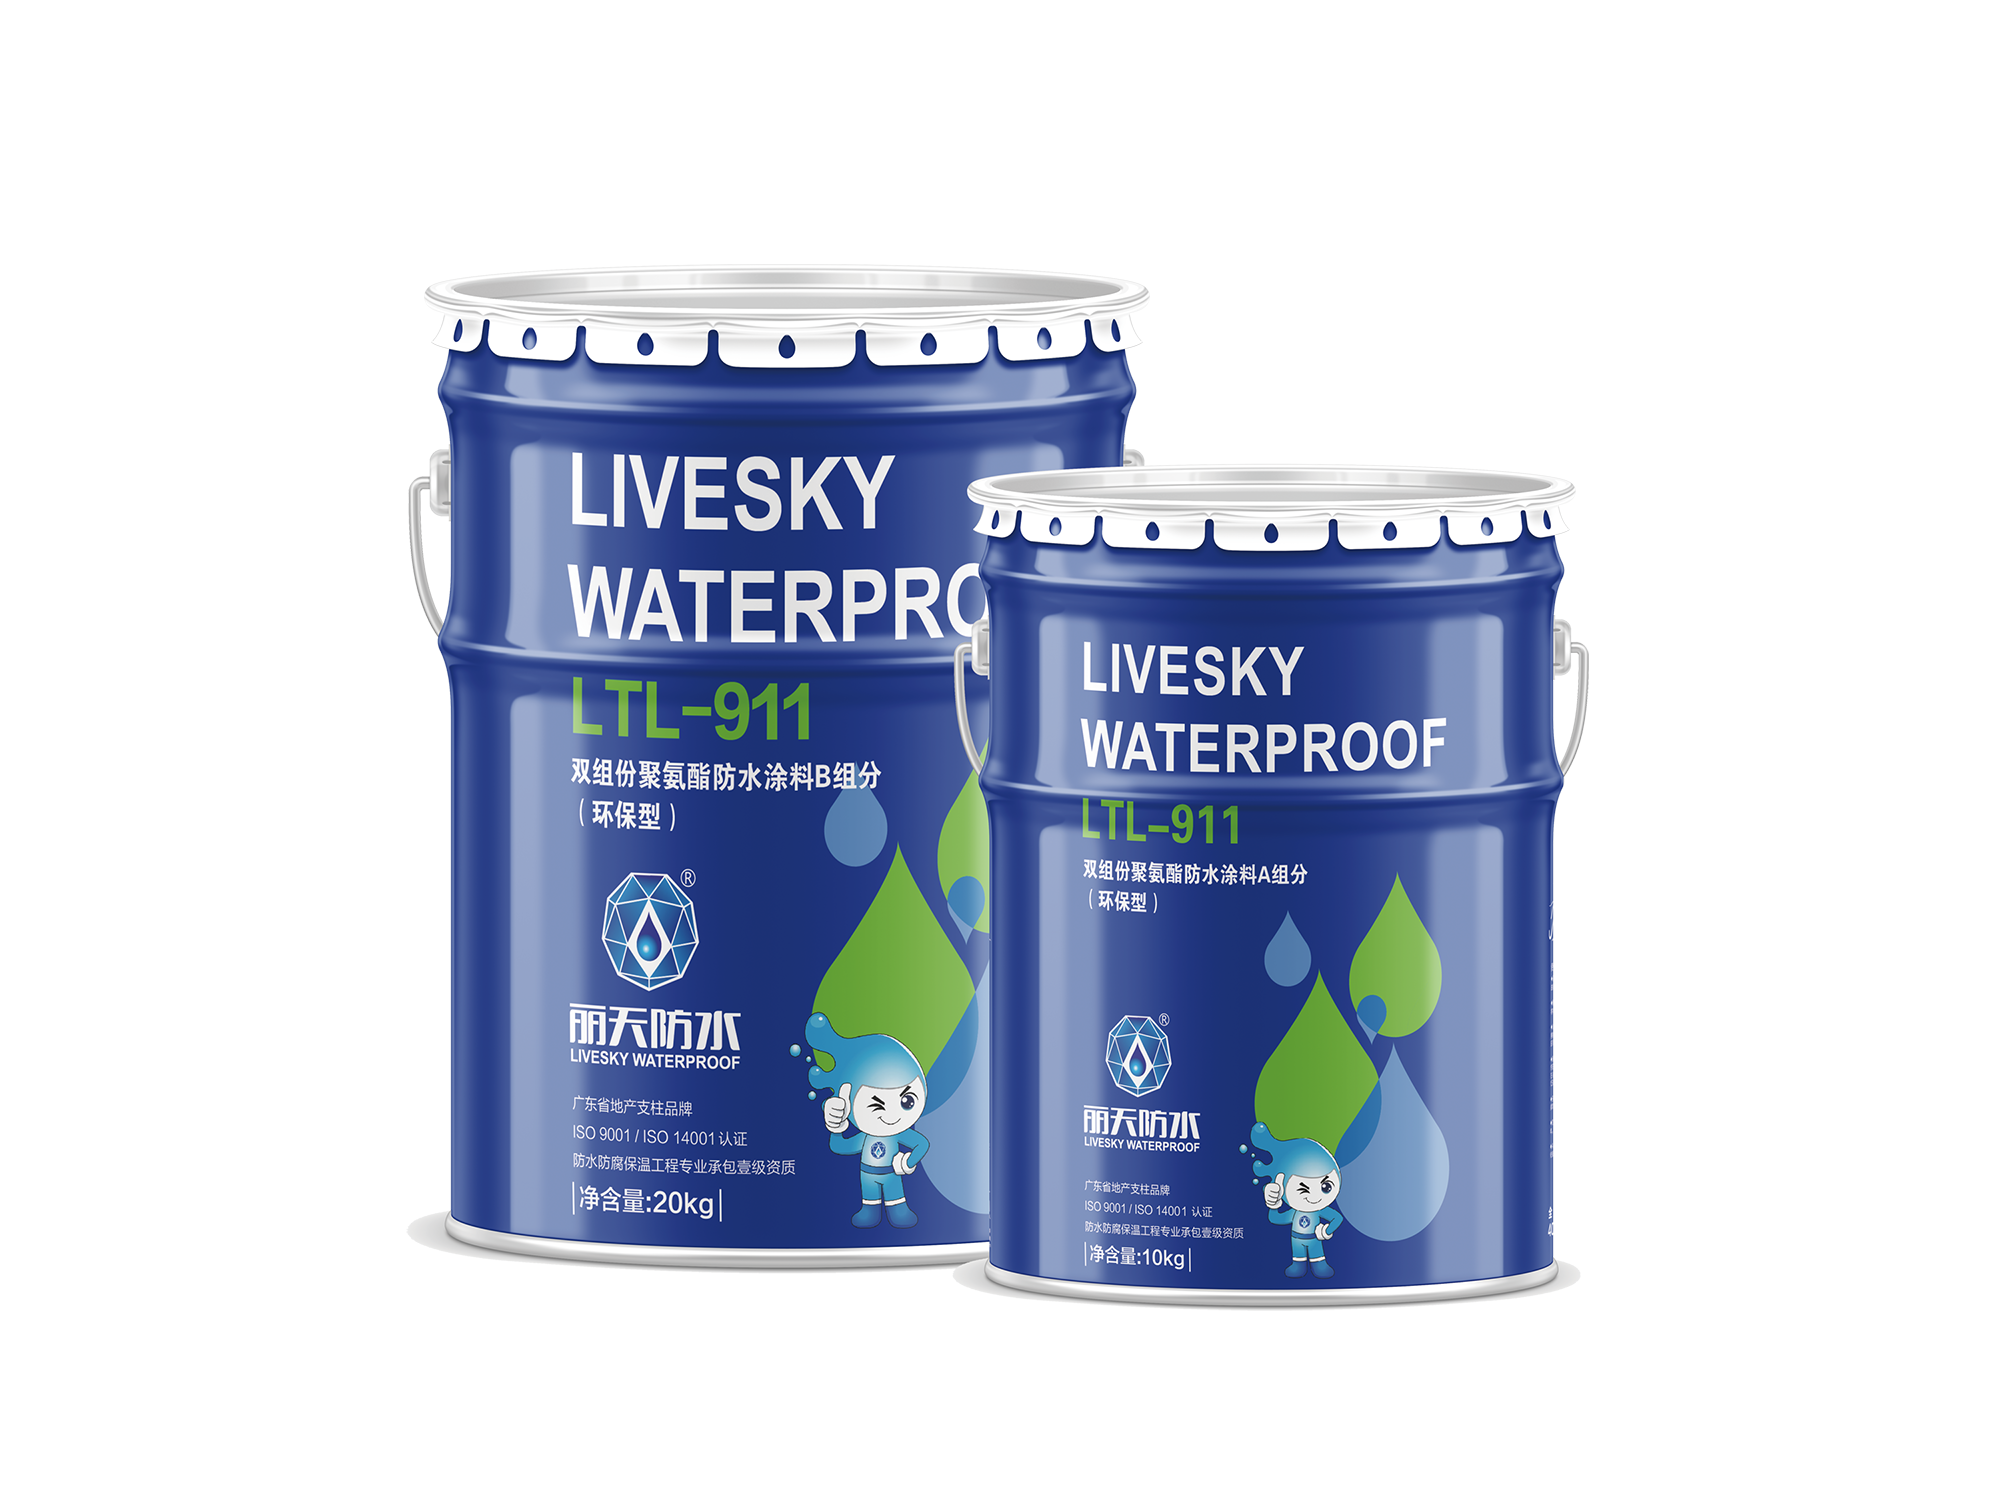  LTL-911 双组份聚氨酯防水涂料（环保型）